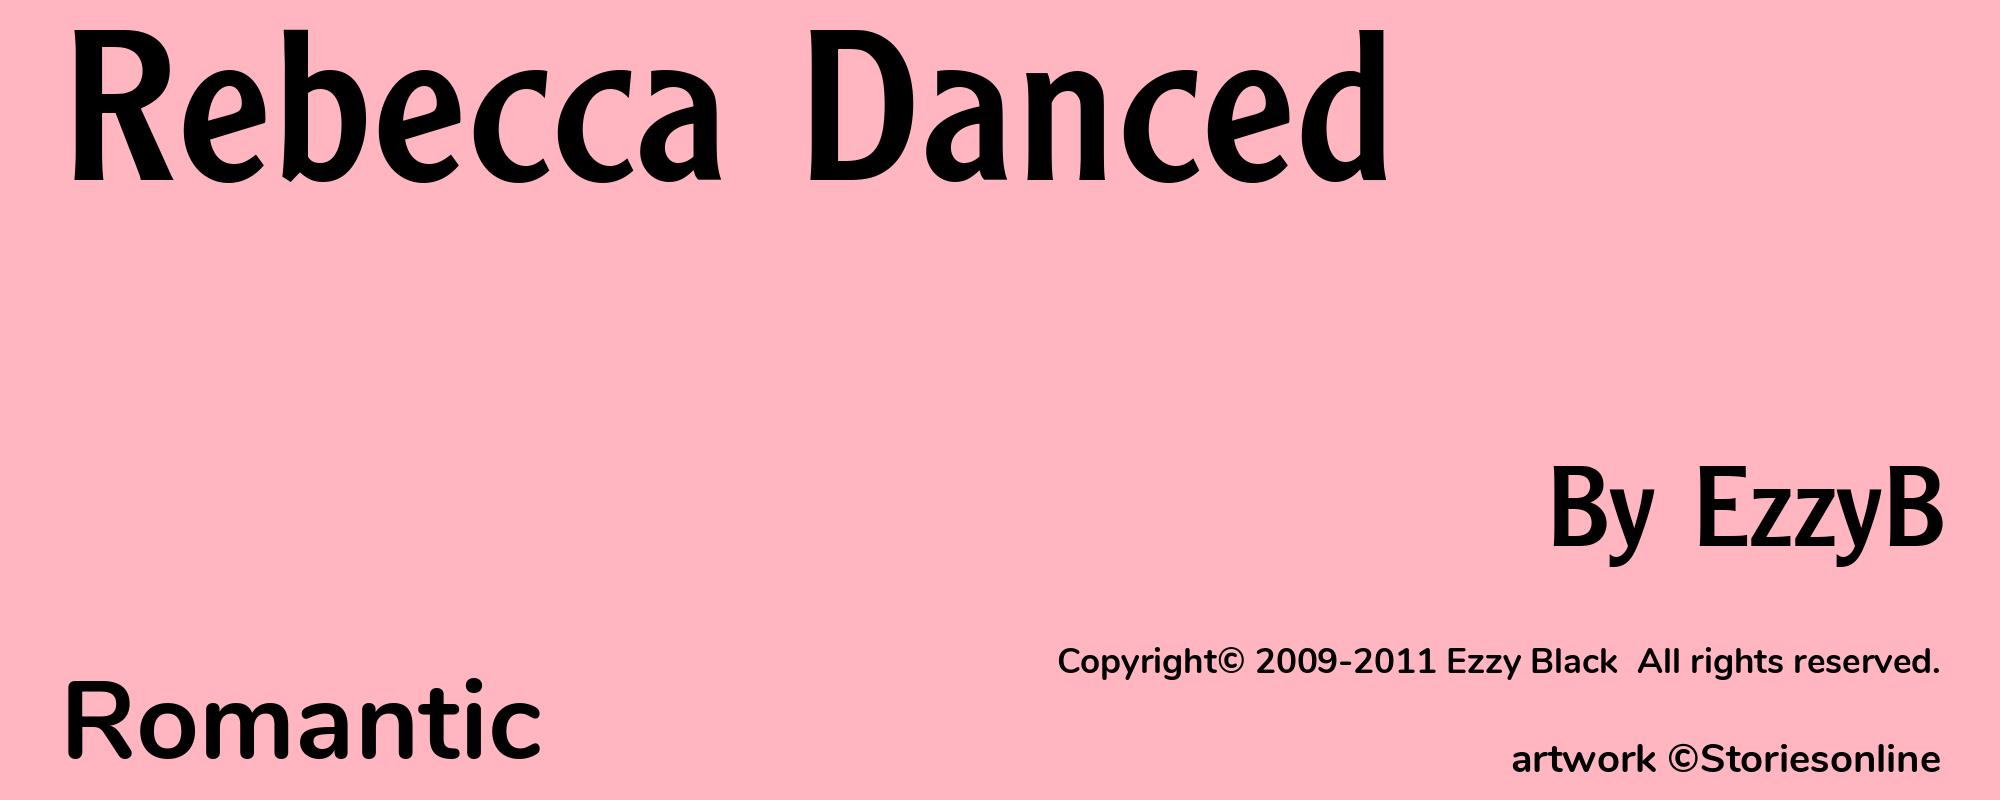 Rebecca Danced - Cover